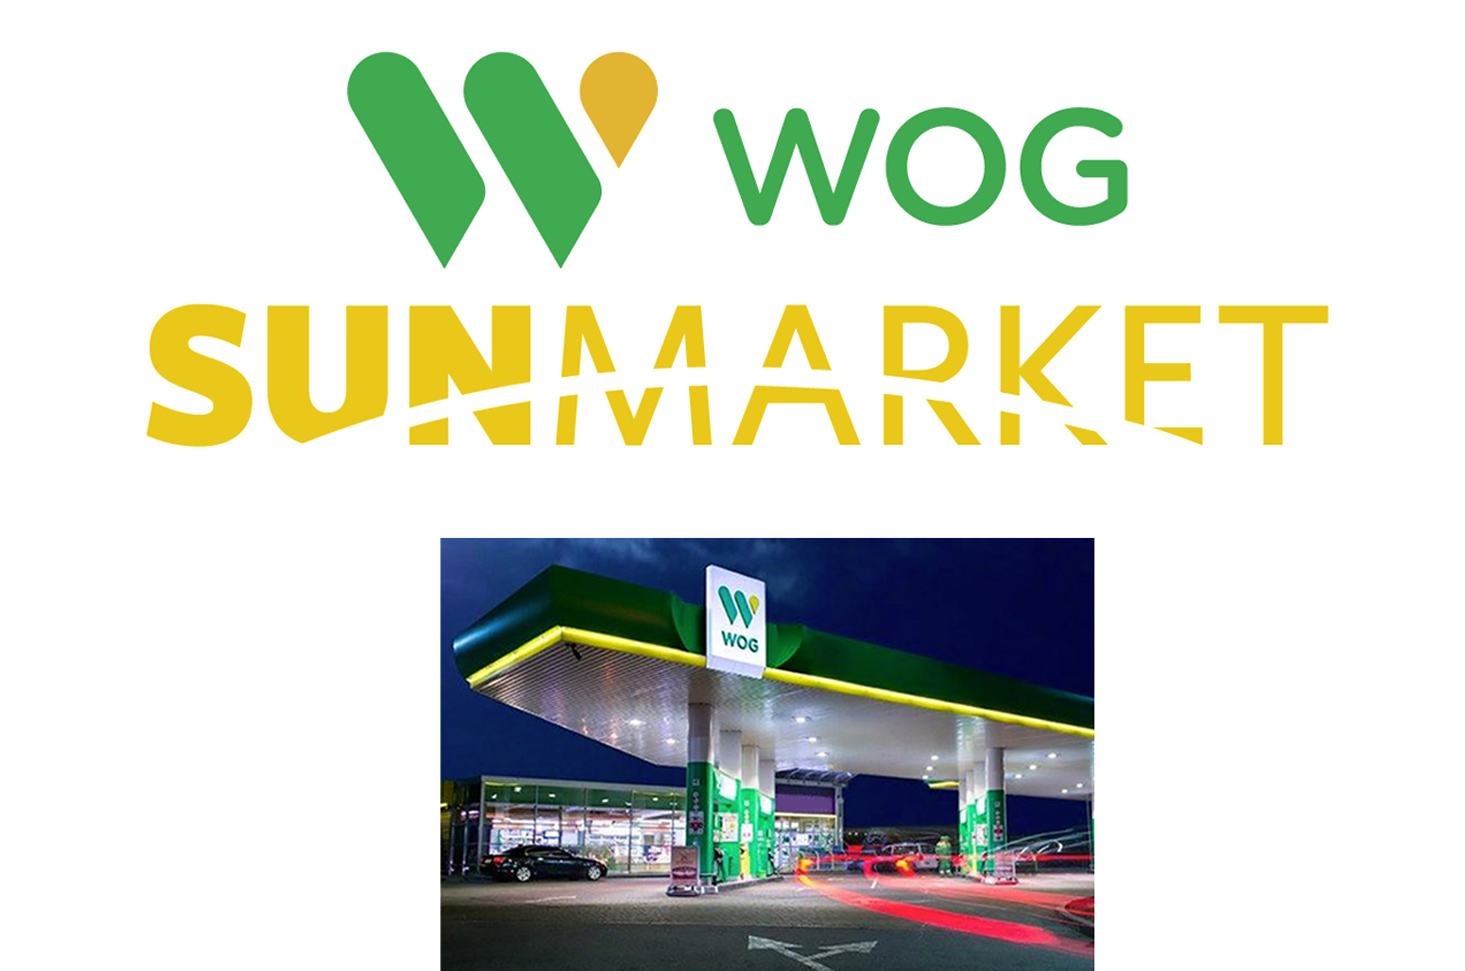 Petrol forecourt as a convenience retail destination at WOG and Socar